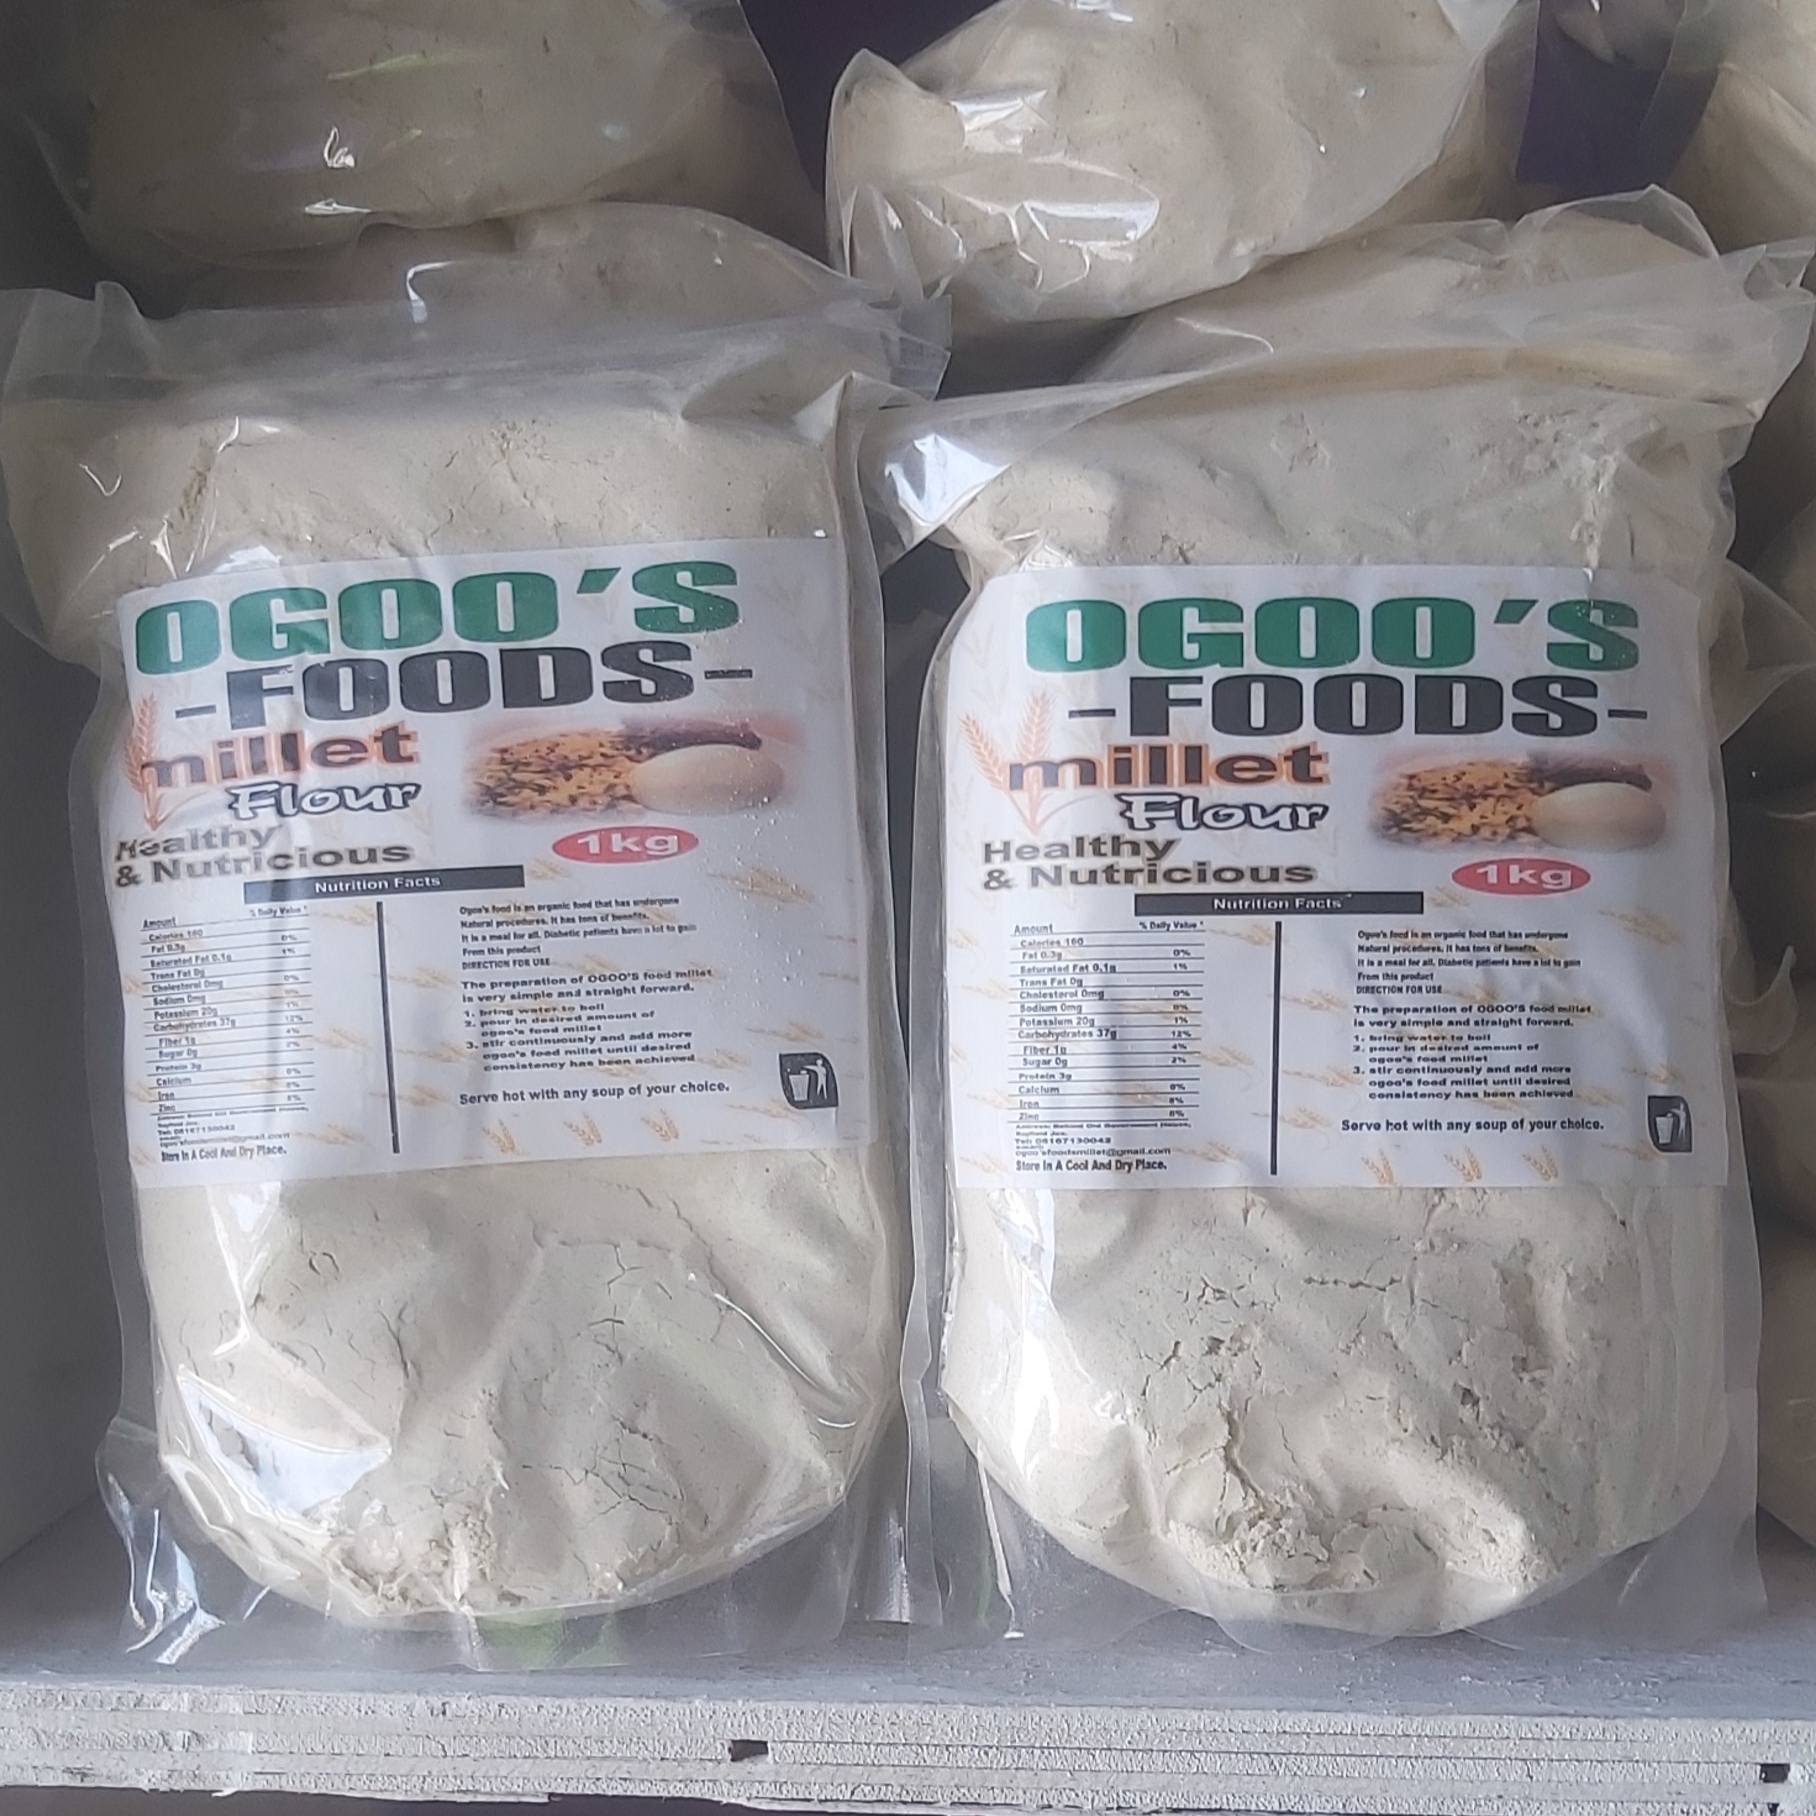 Ogoo’s millet flour